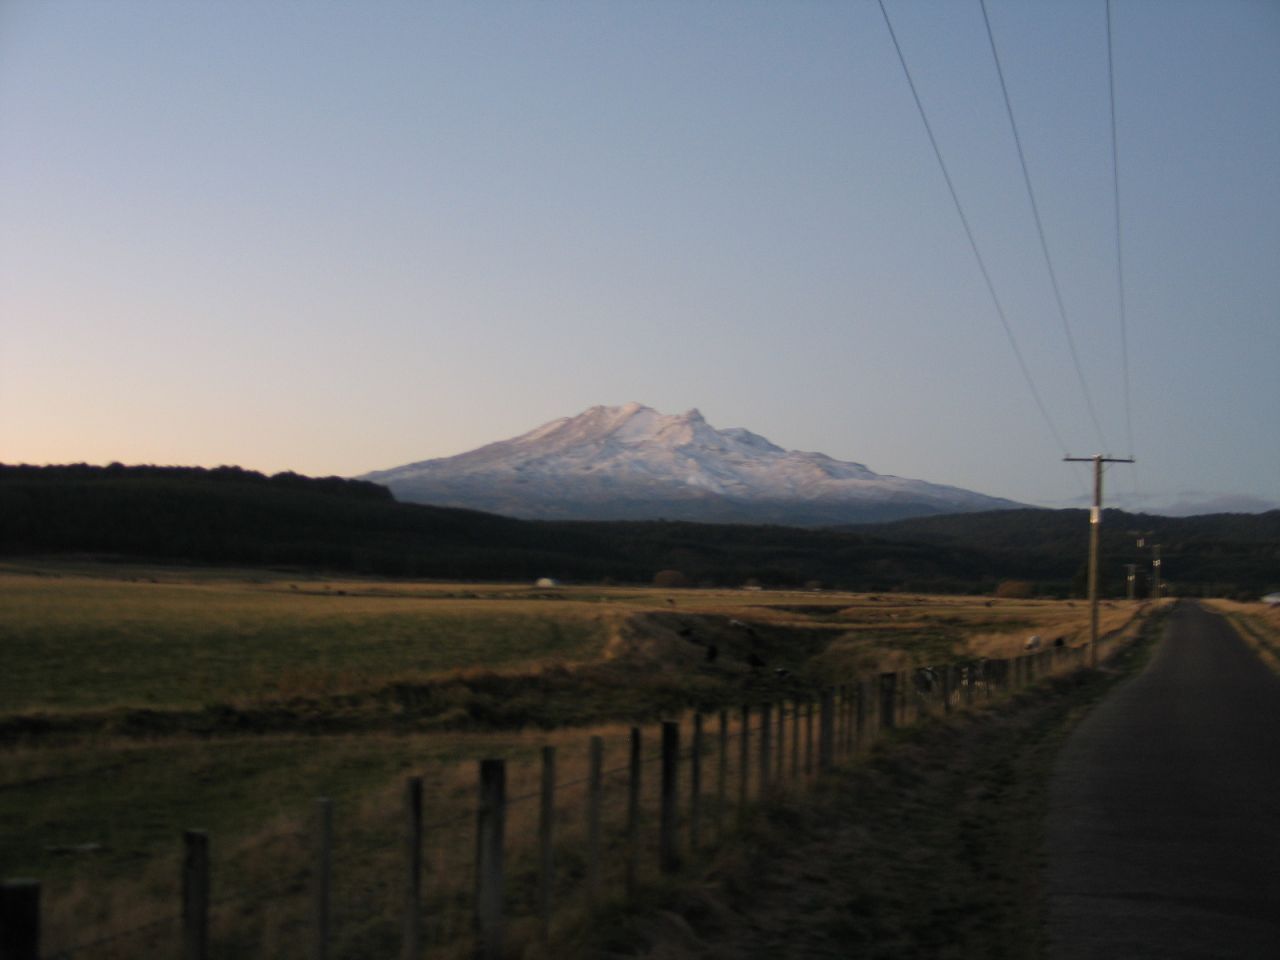 fotka / image Mt. Ruapehu, New Zealand, kolekce E